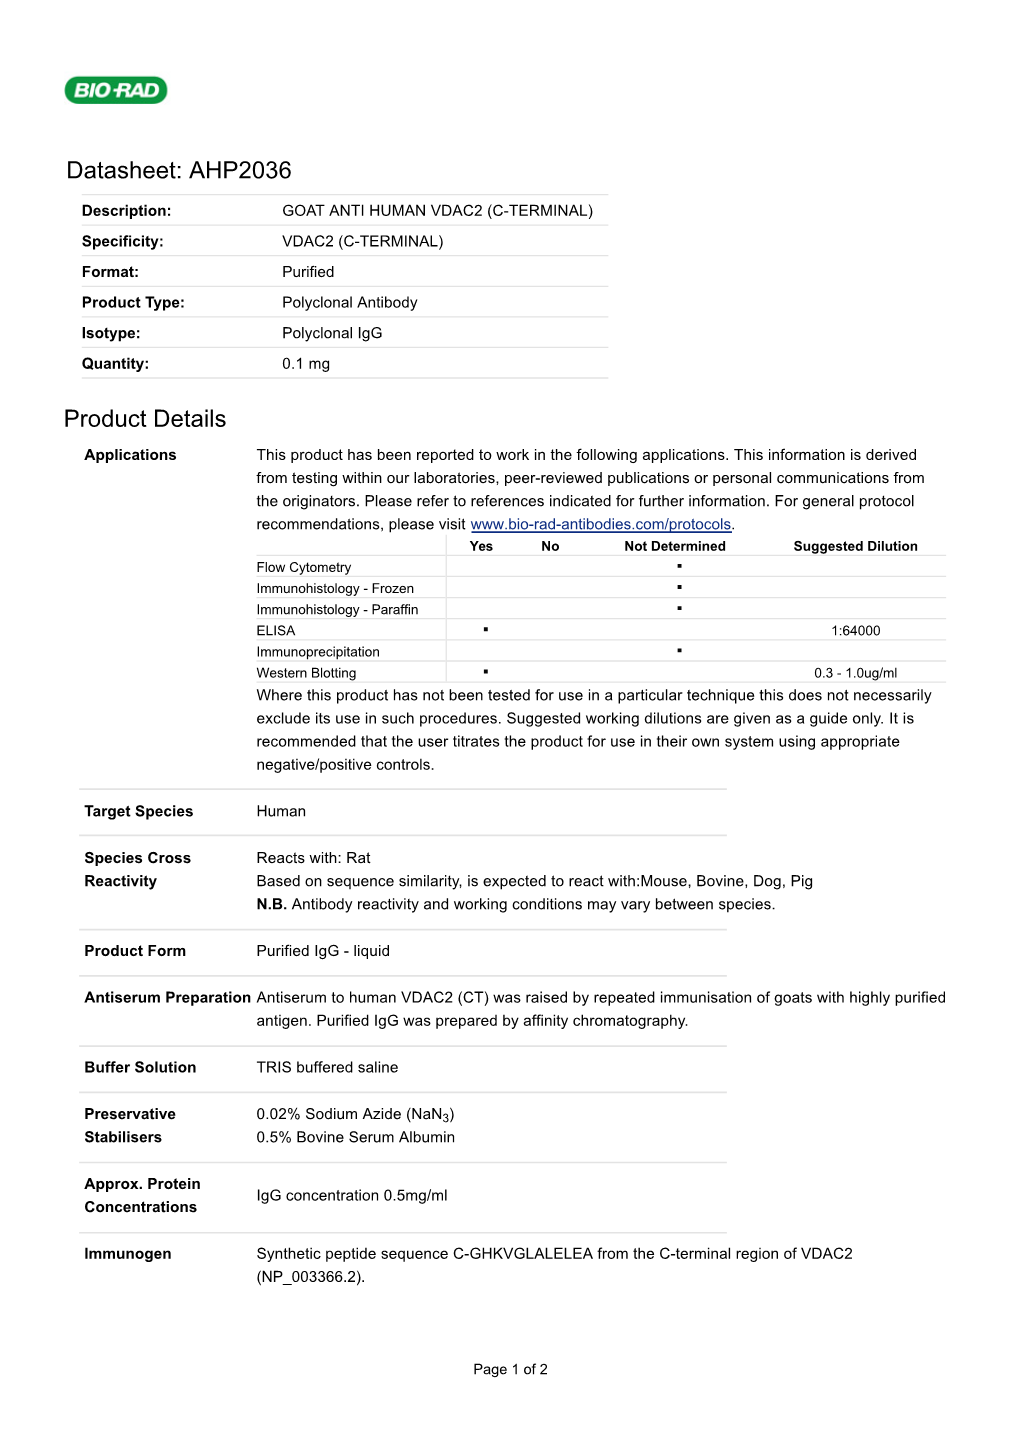 Datasheet: AHP2036 Product Details